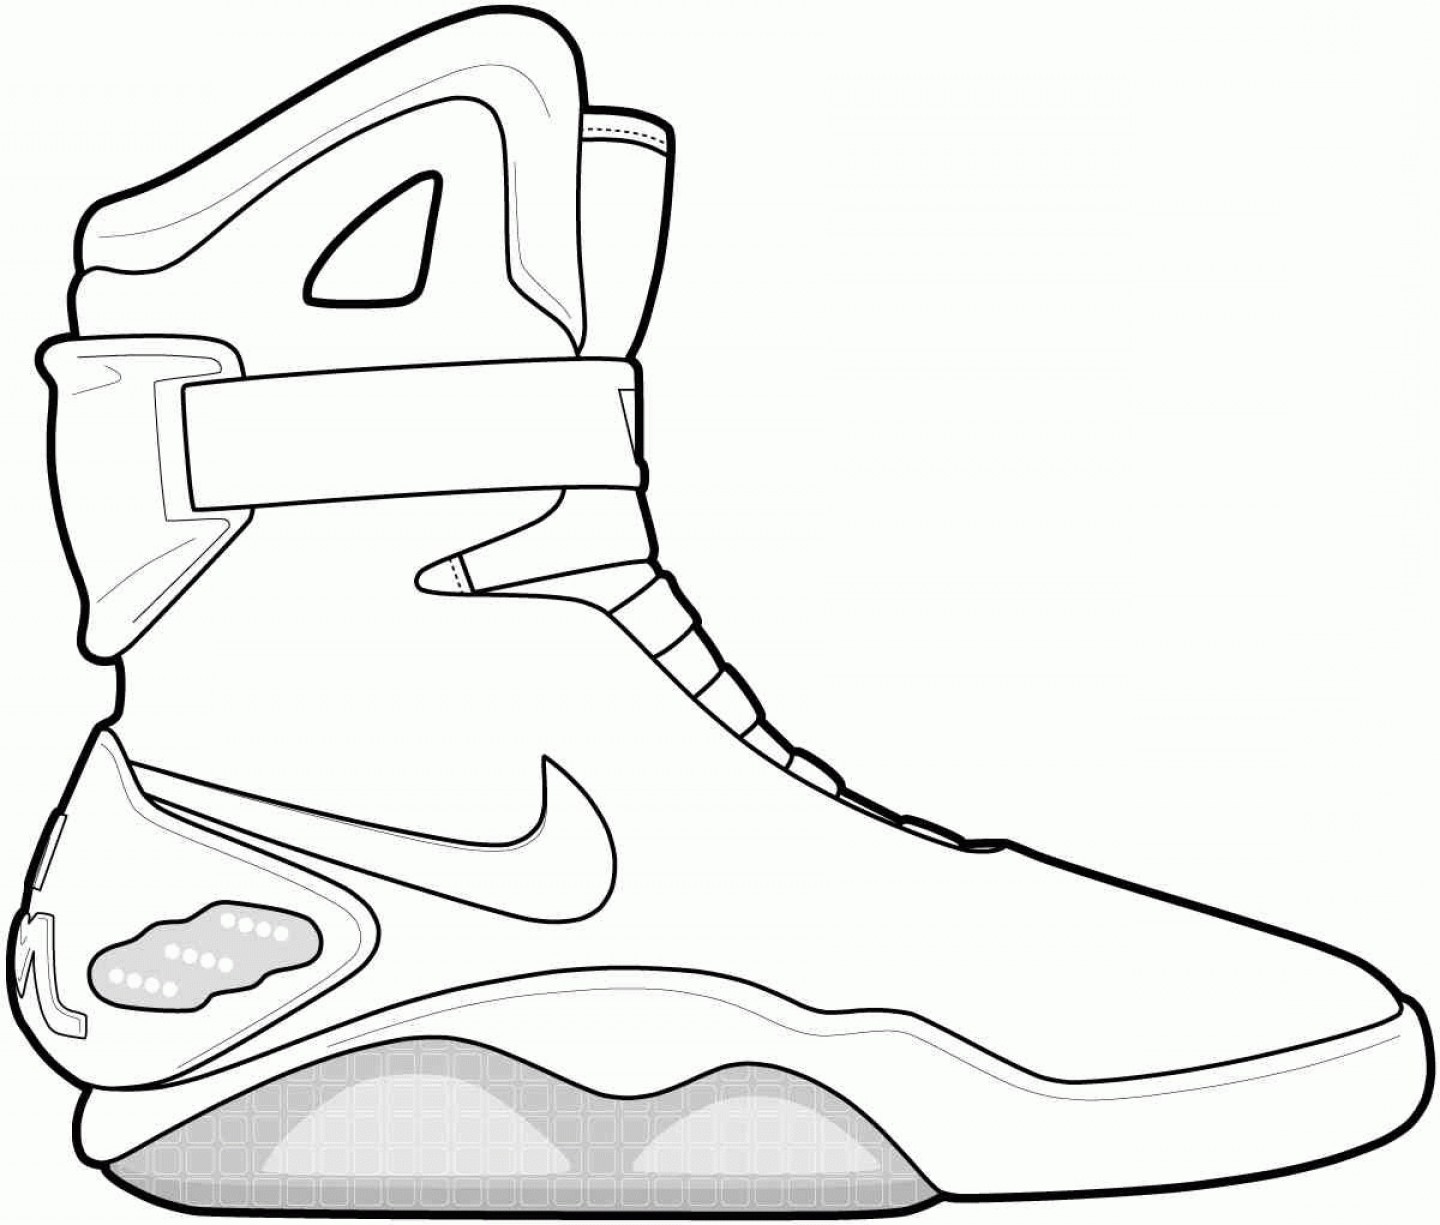 Jordan Shoe Drawing at PaintingValley.com | Explore ...